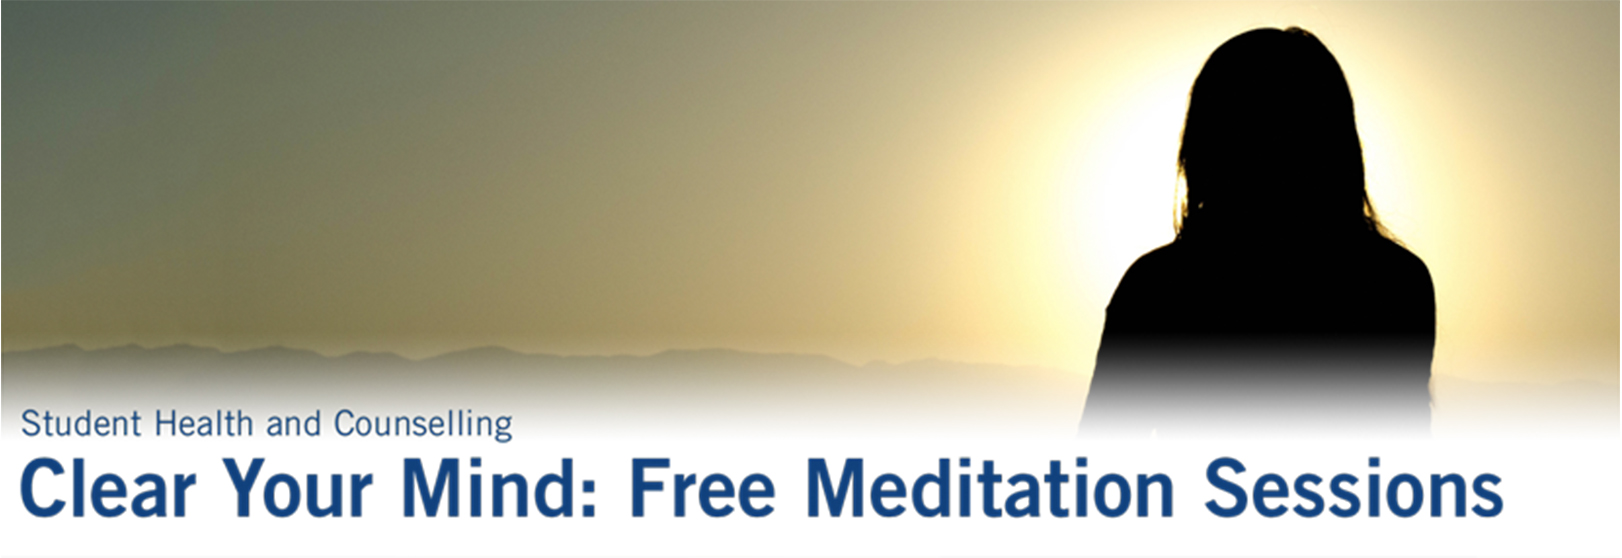 Free meditation sessions